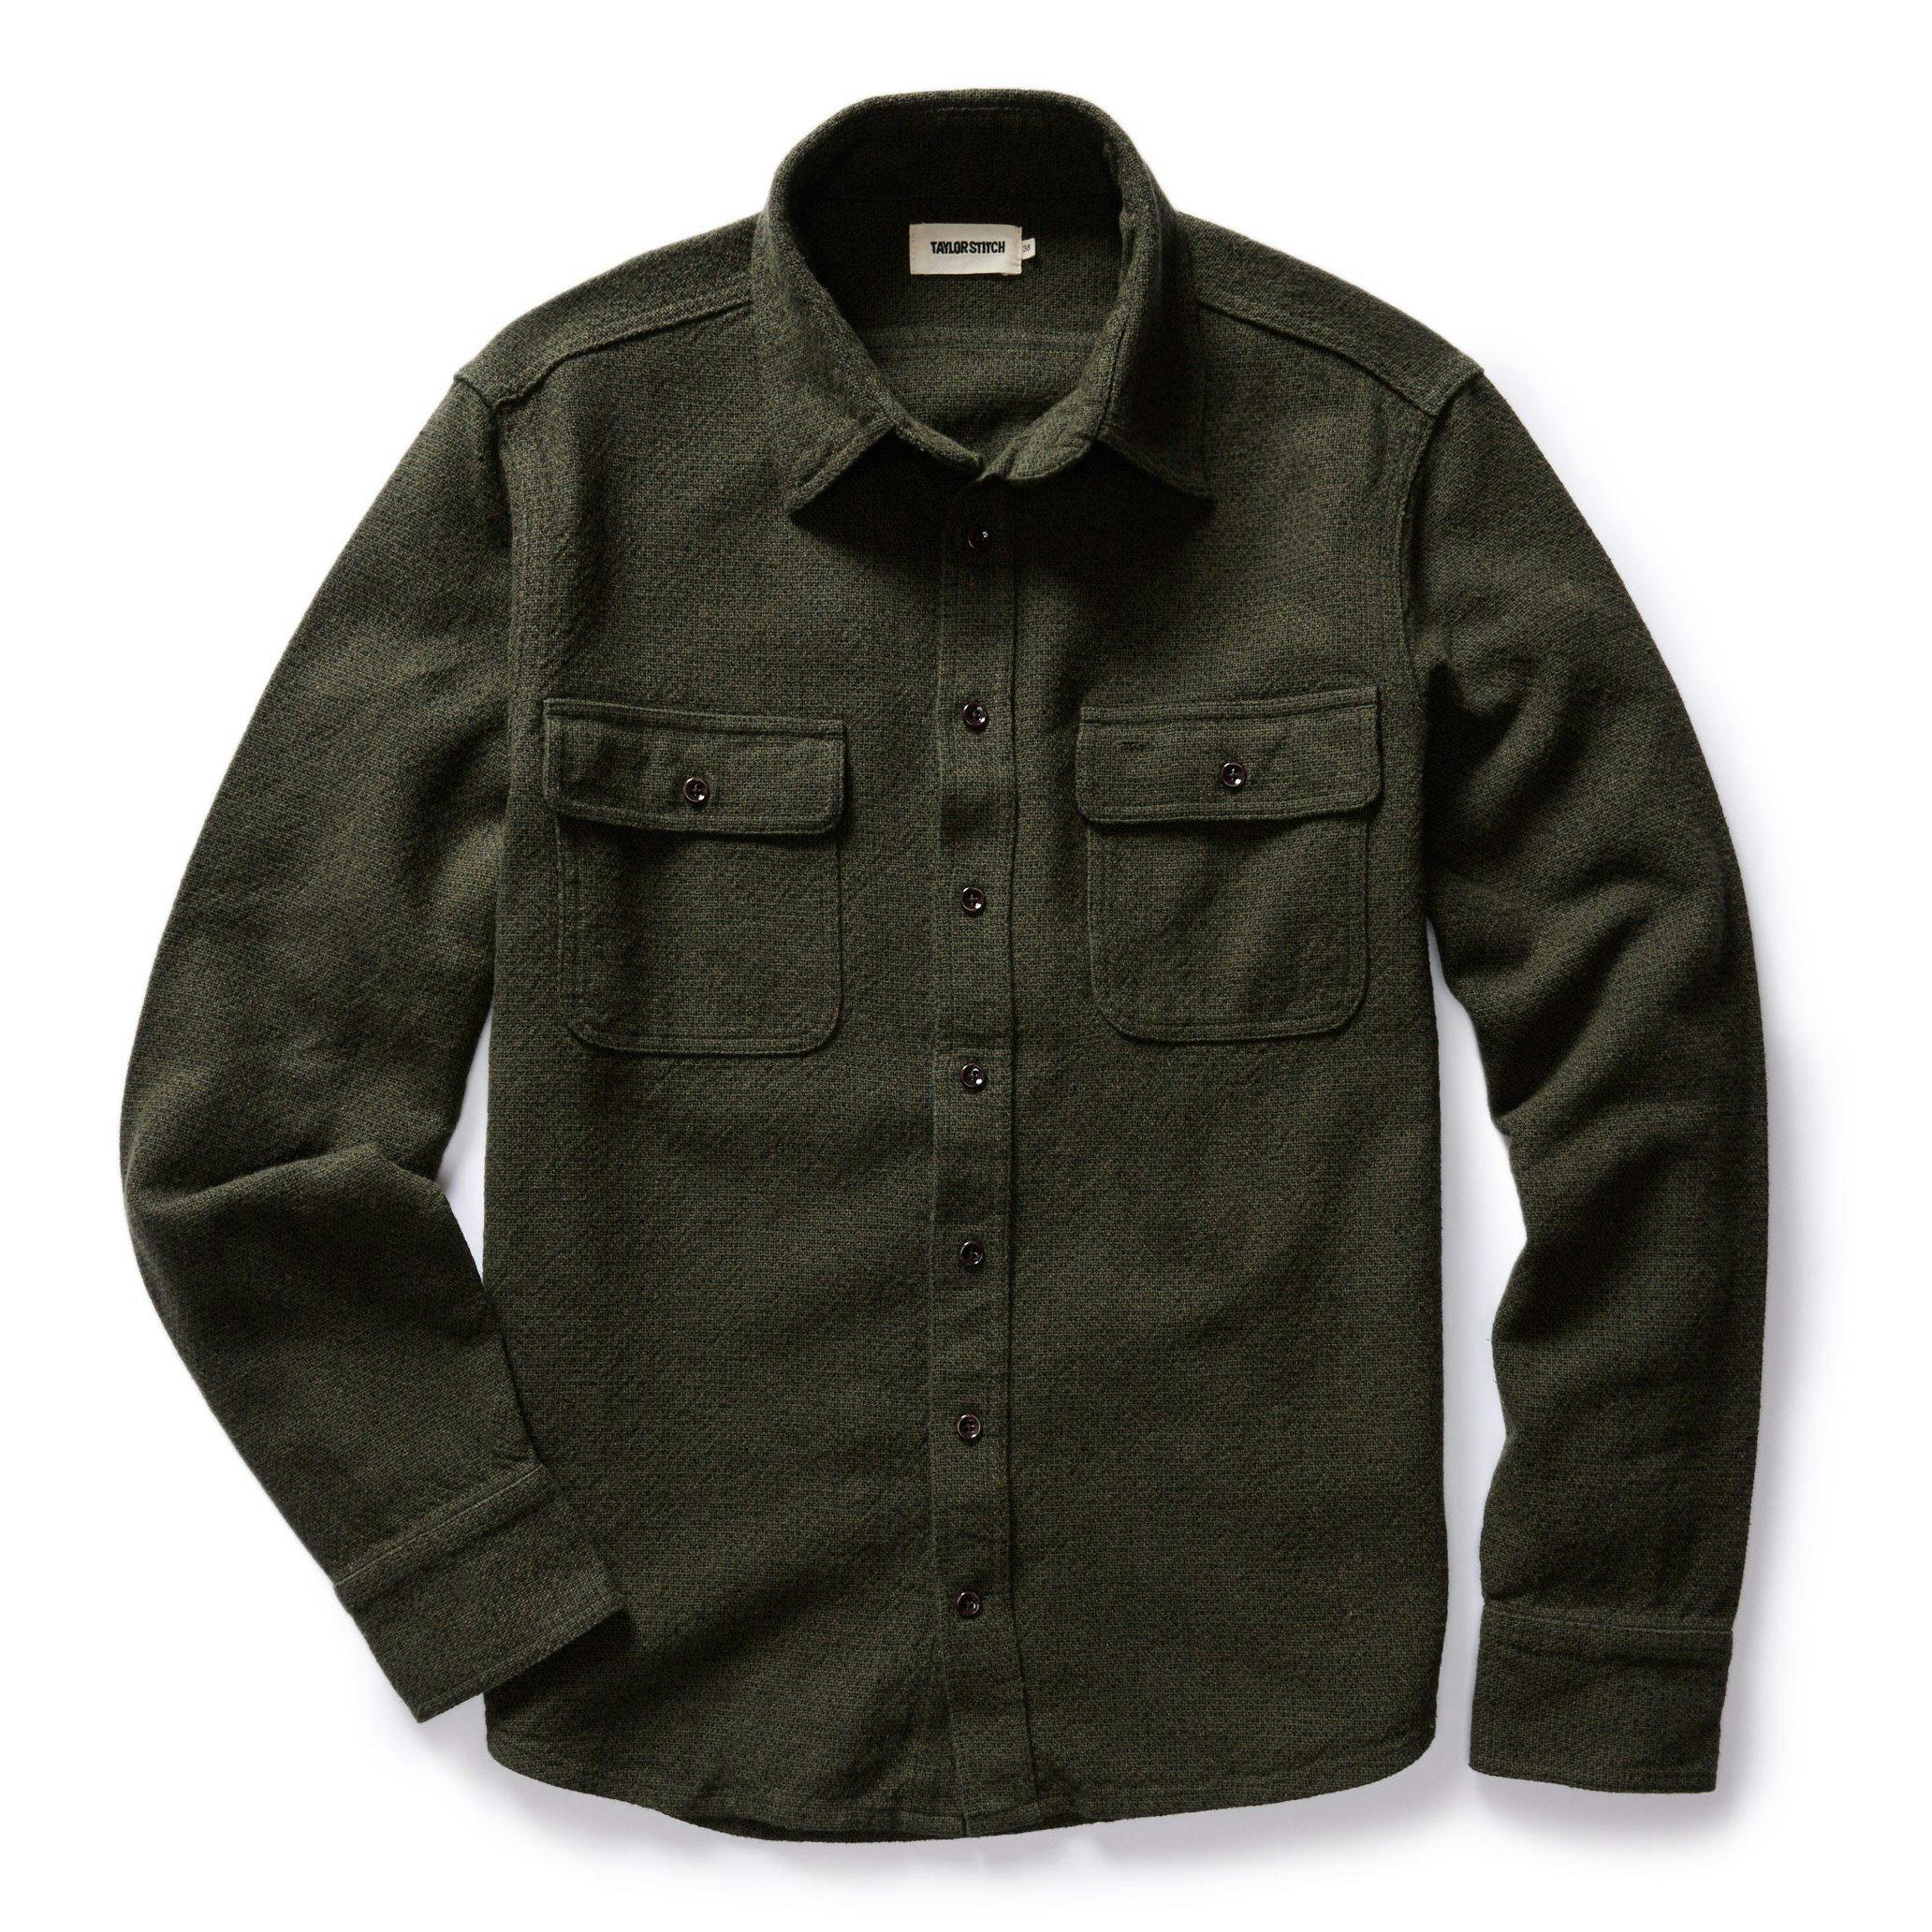 1940s Men’s Work Clothes, Casual Wear The Ledge Washed Linen Cotton Tweed Shirt $138.00 AT vintagedancer.com